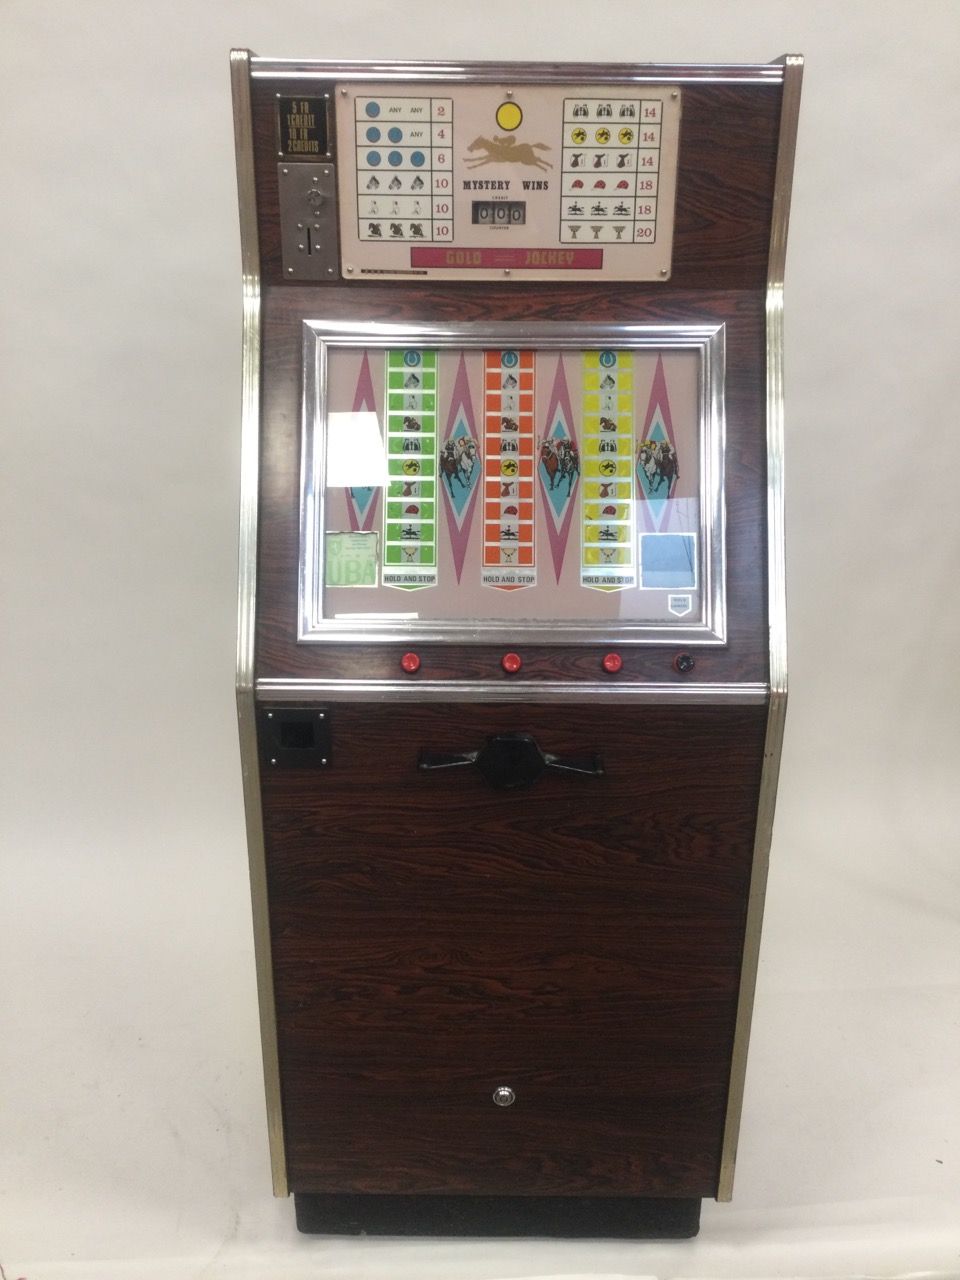 Null MYSTERY WINS GOLD JOCKEY 1973 slot machine dim: h 155 w 62